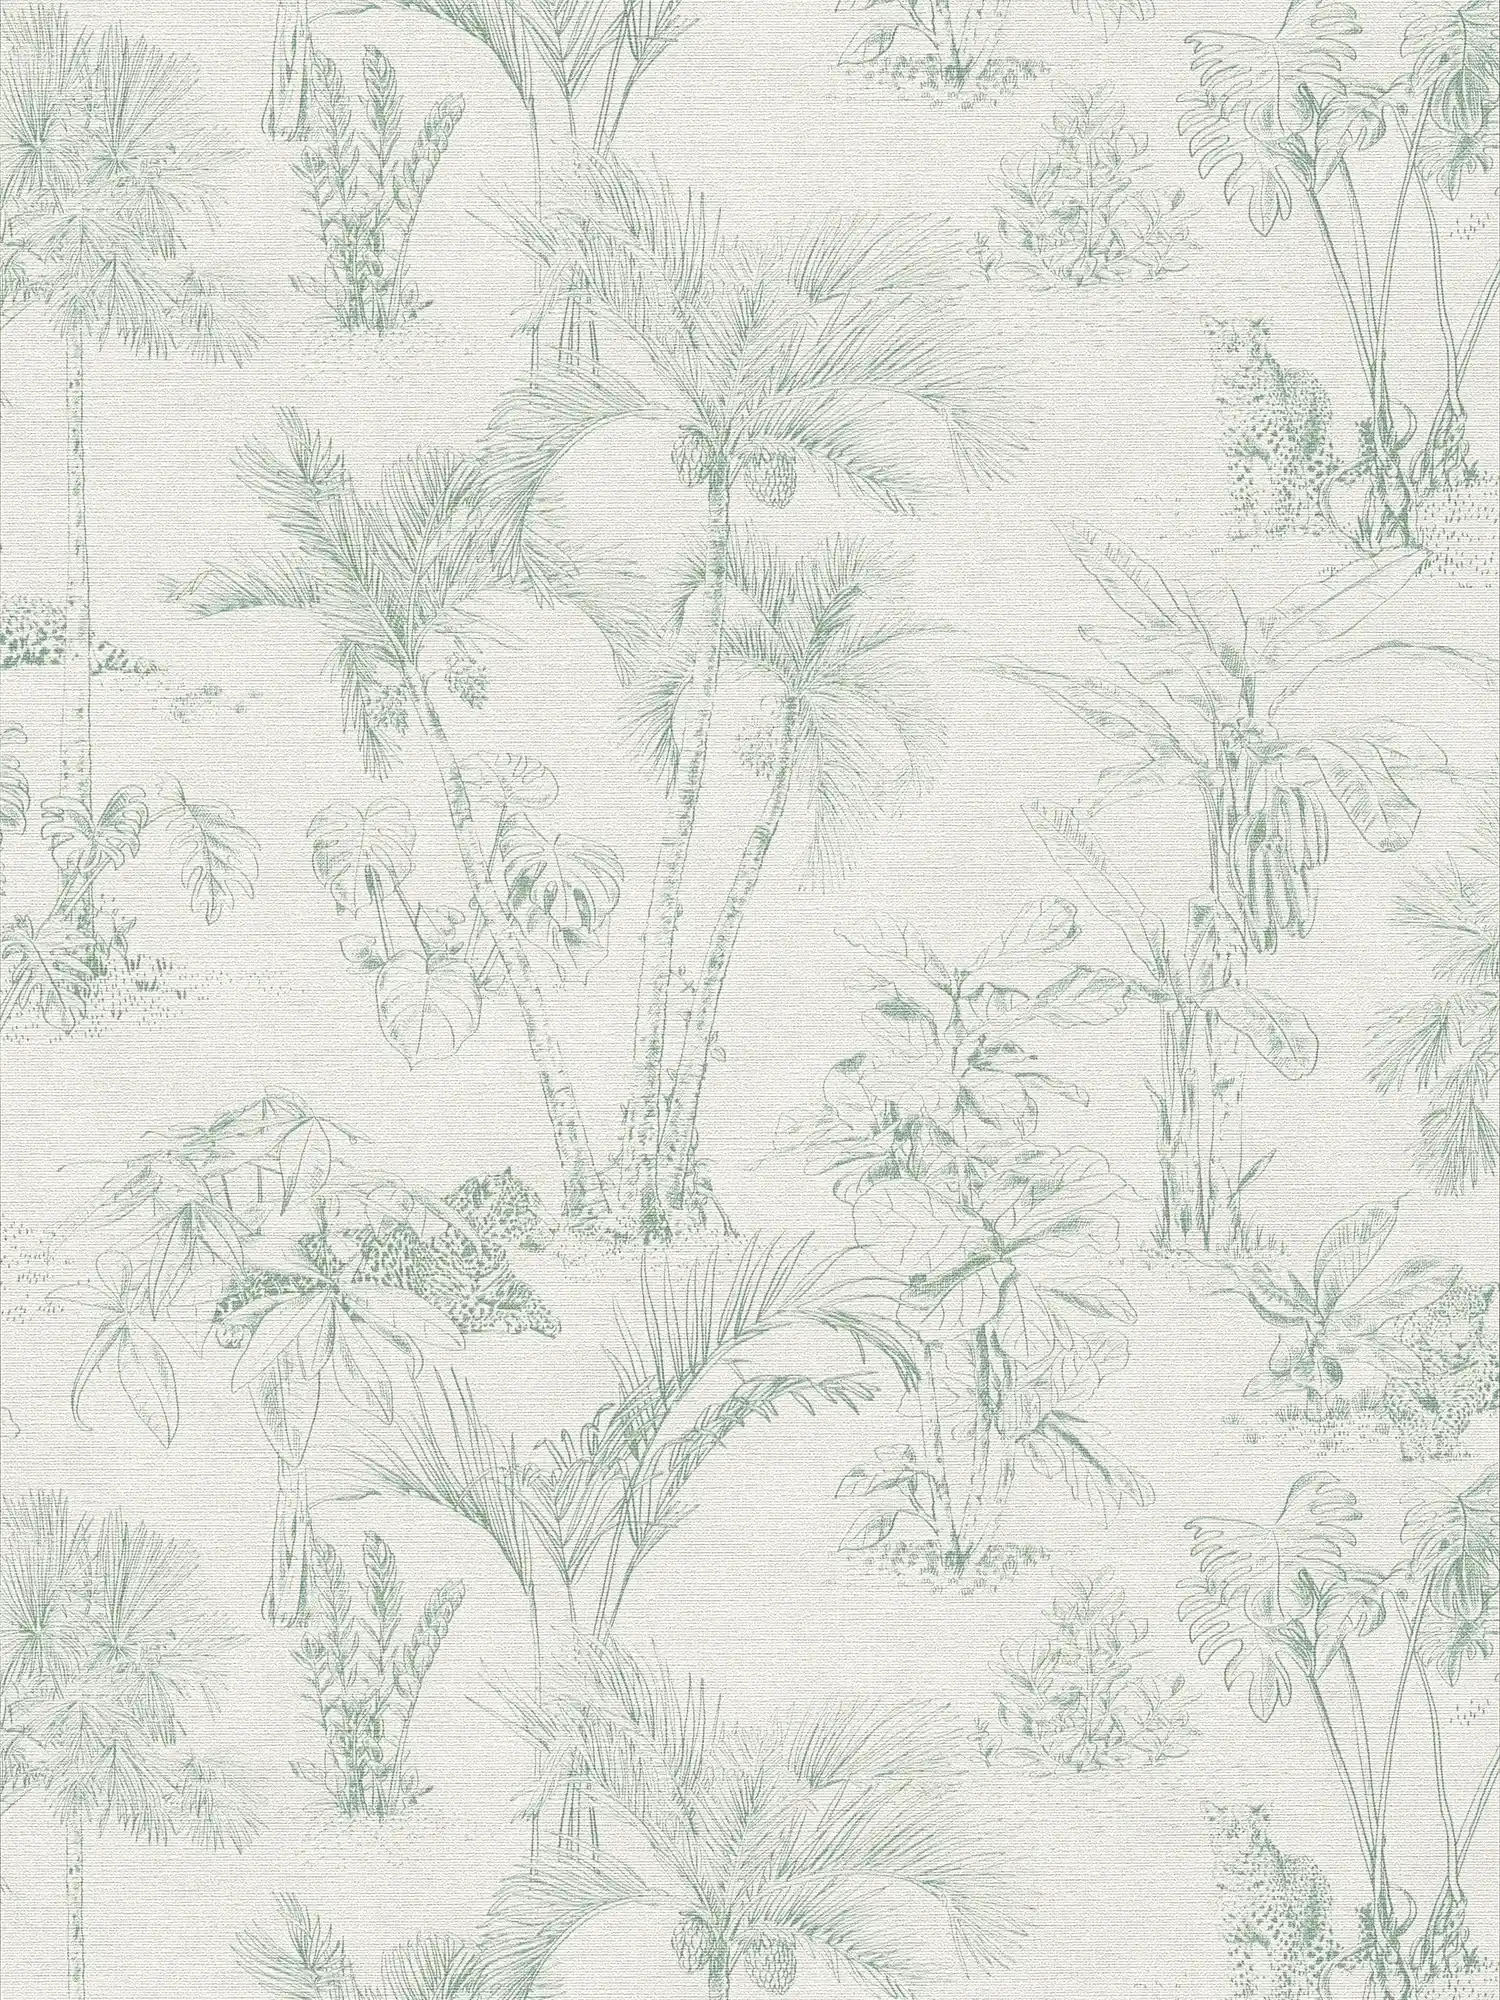 Linen optics wallpaper jungle design with palm trees - grey, green
